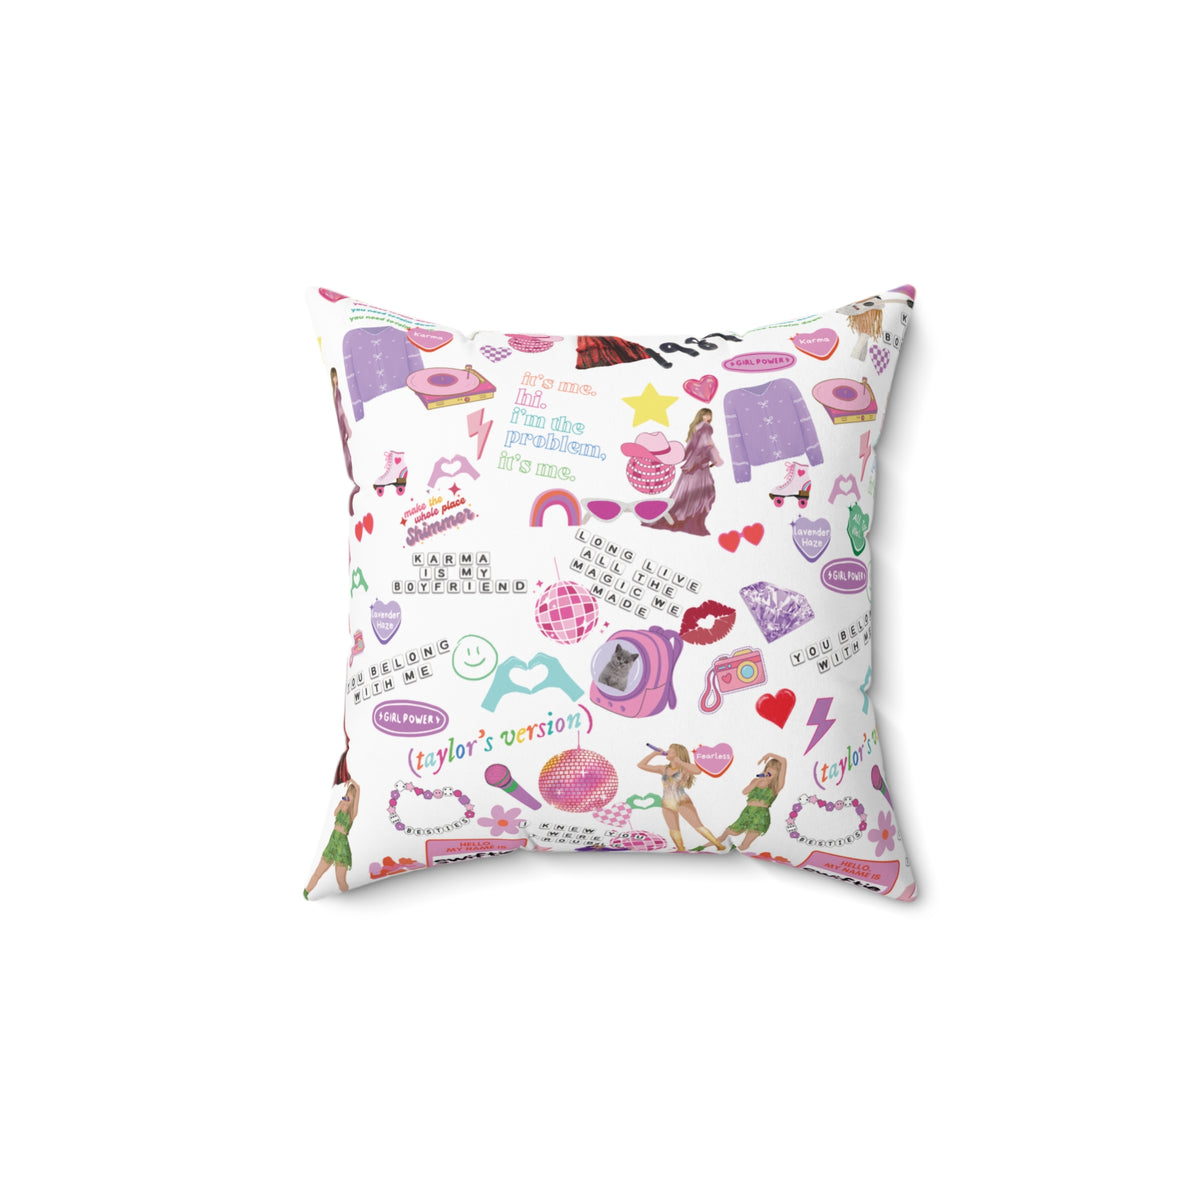 Taylor Swift Personalized Pillow Gift Eras Merch custom pillow for TS gift, birthday, teen Swiftie, swifty merch